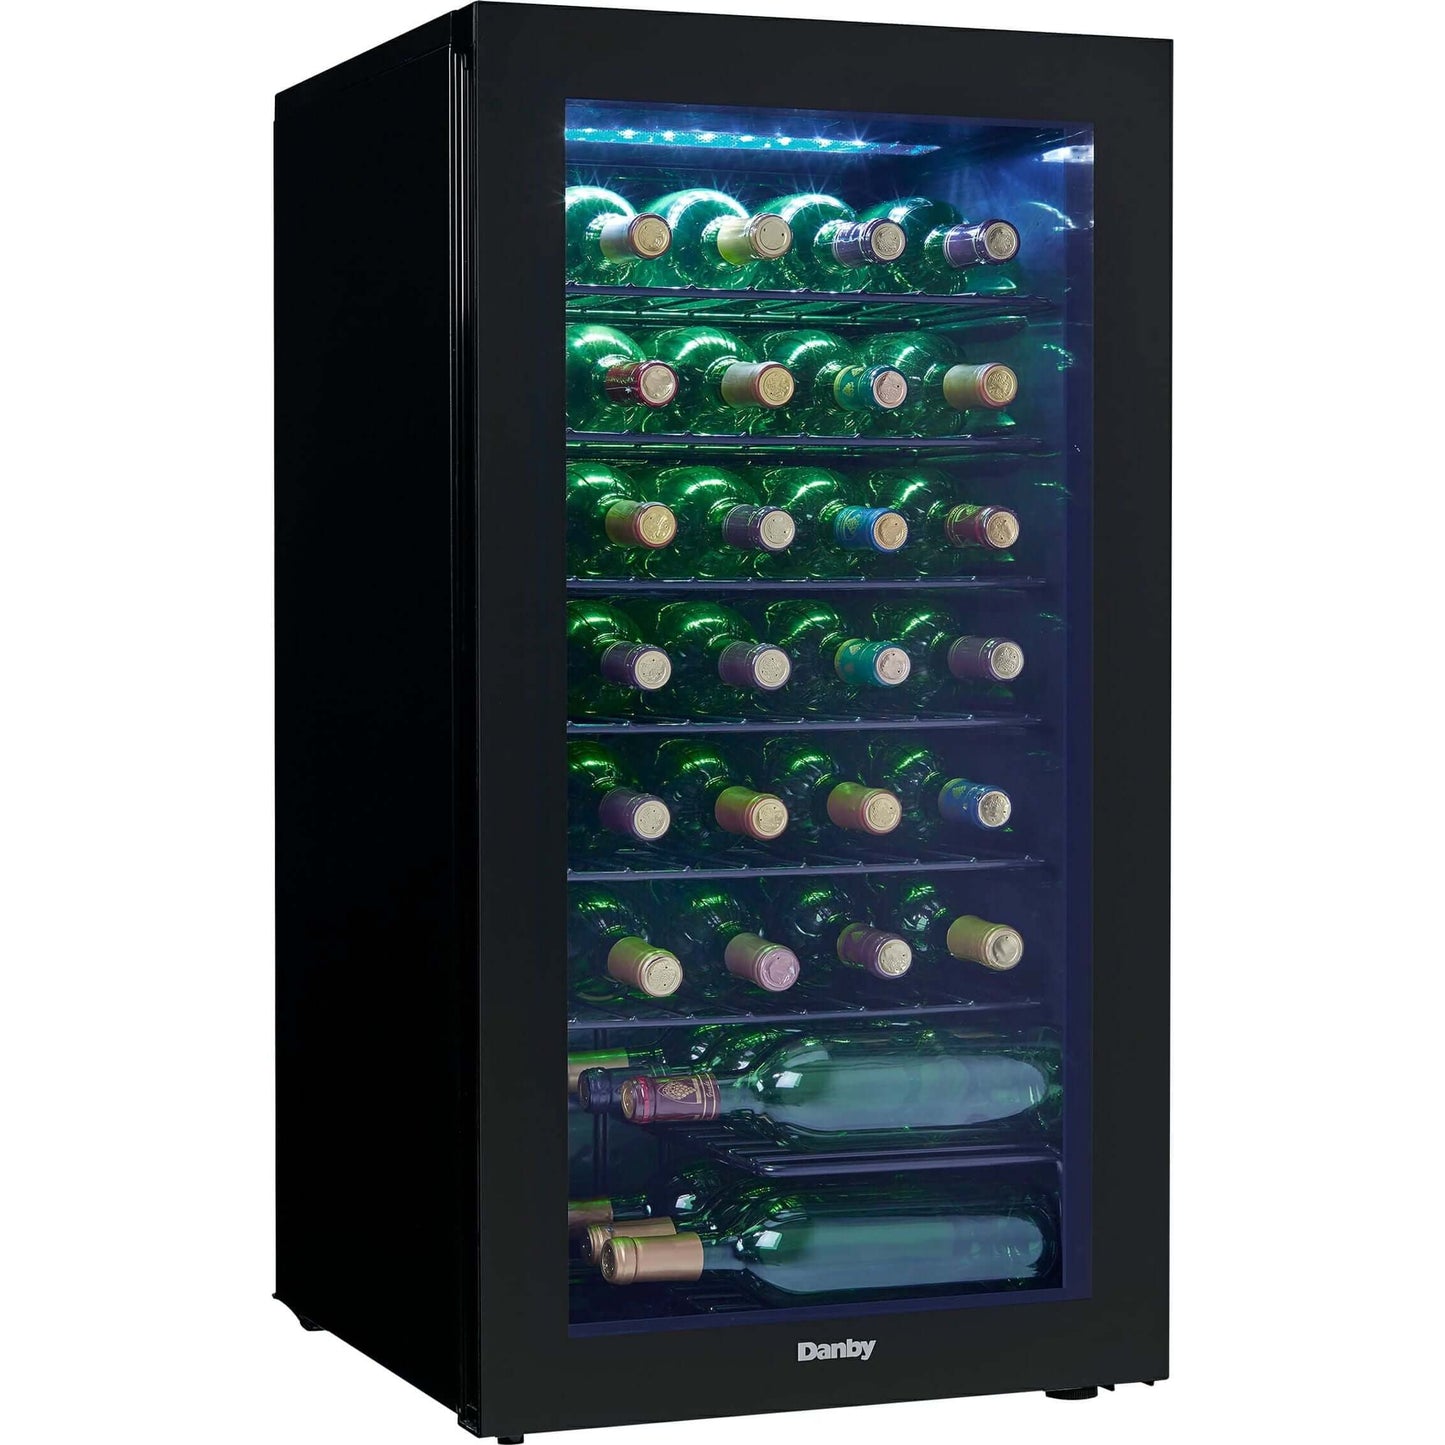 Danby 36 Bottle Free-Standing Wine Cooler in Black